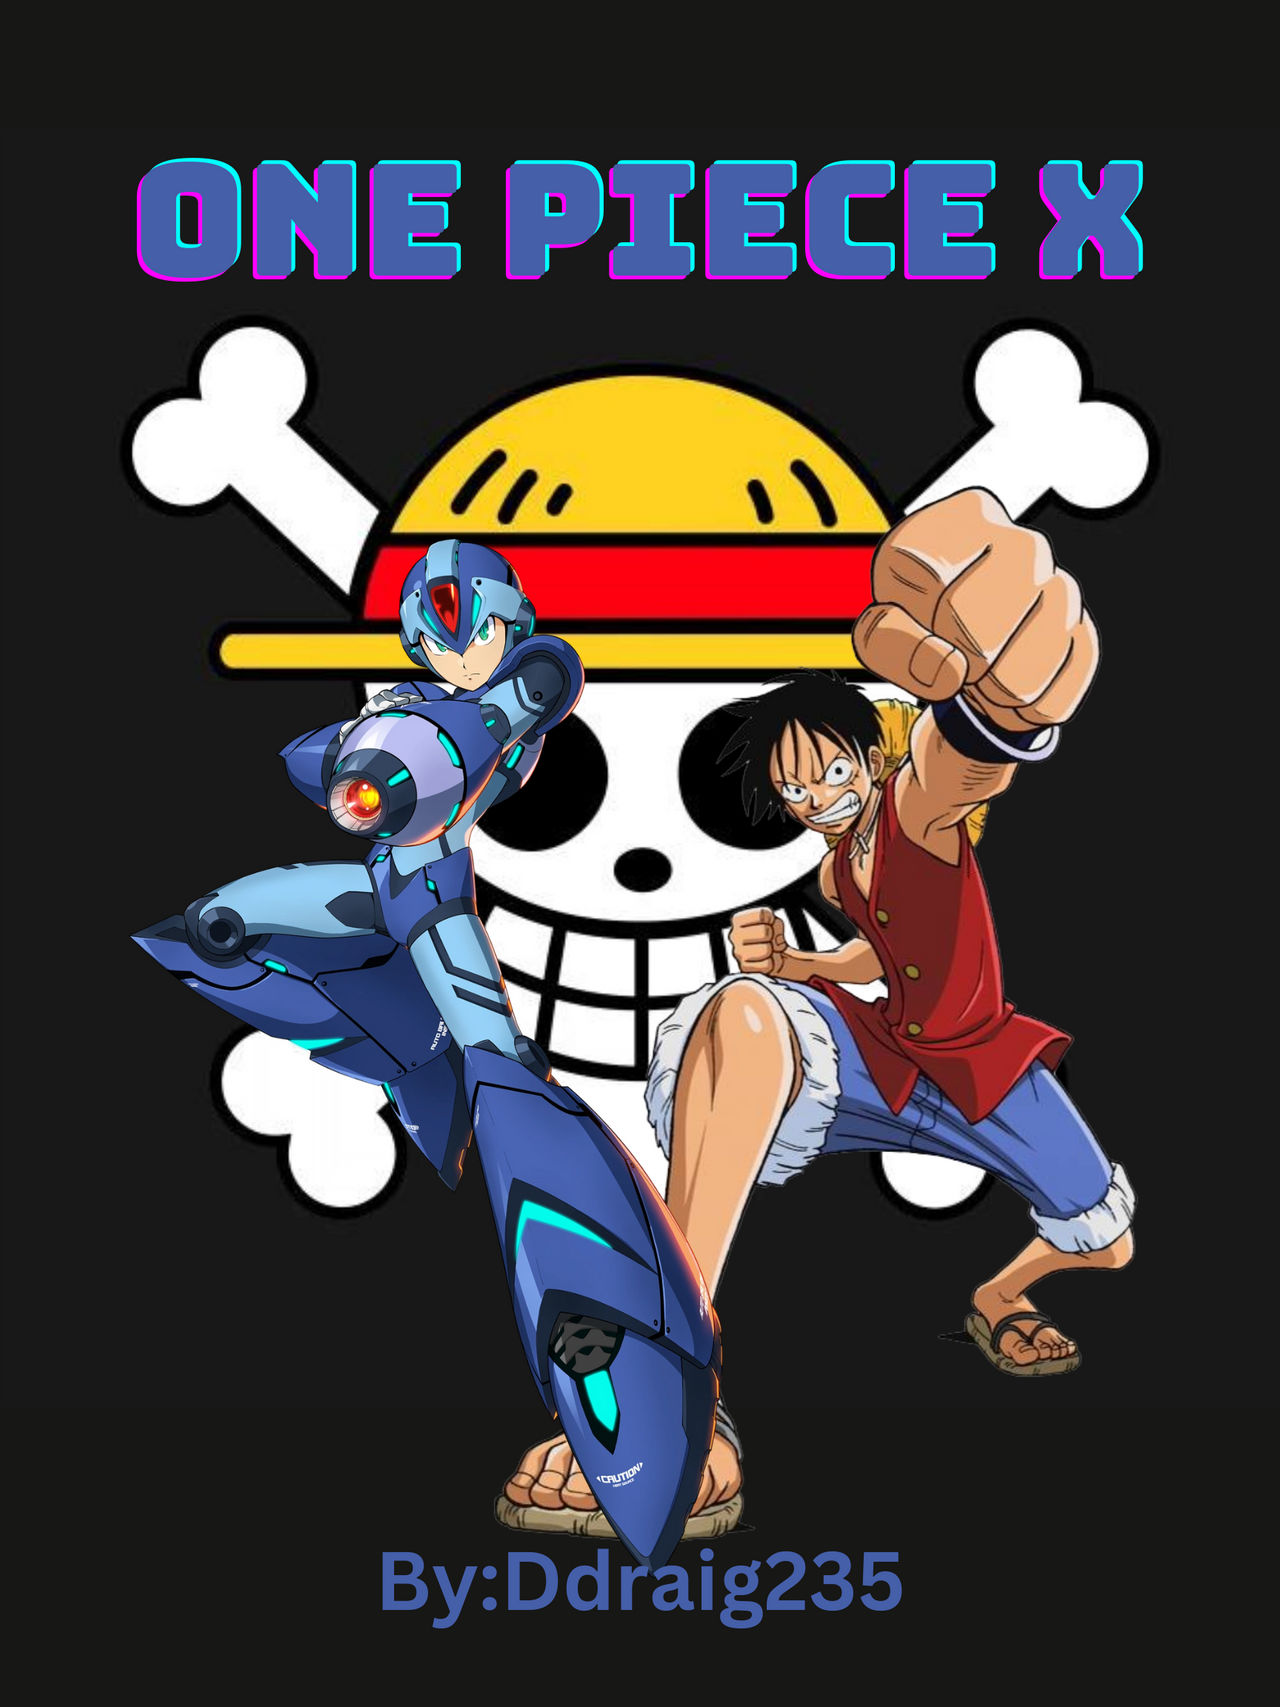 One Piece X by Ddraig235 on DeviantArt